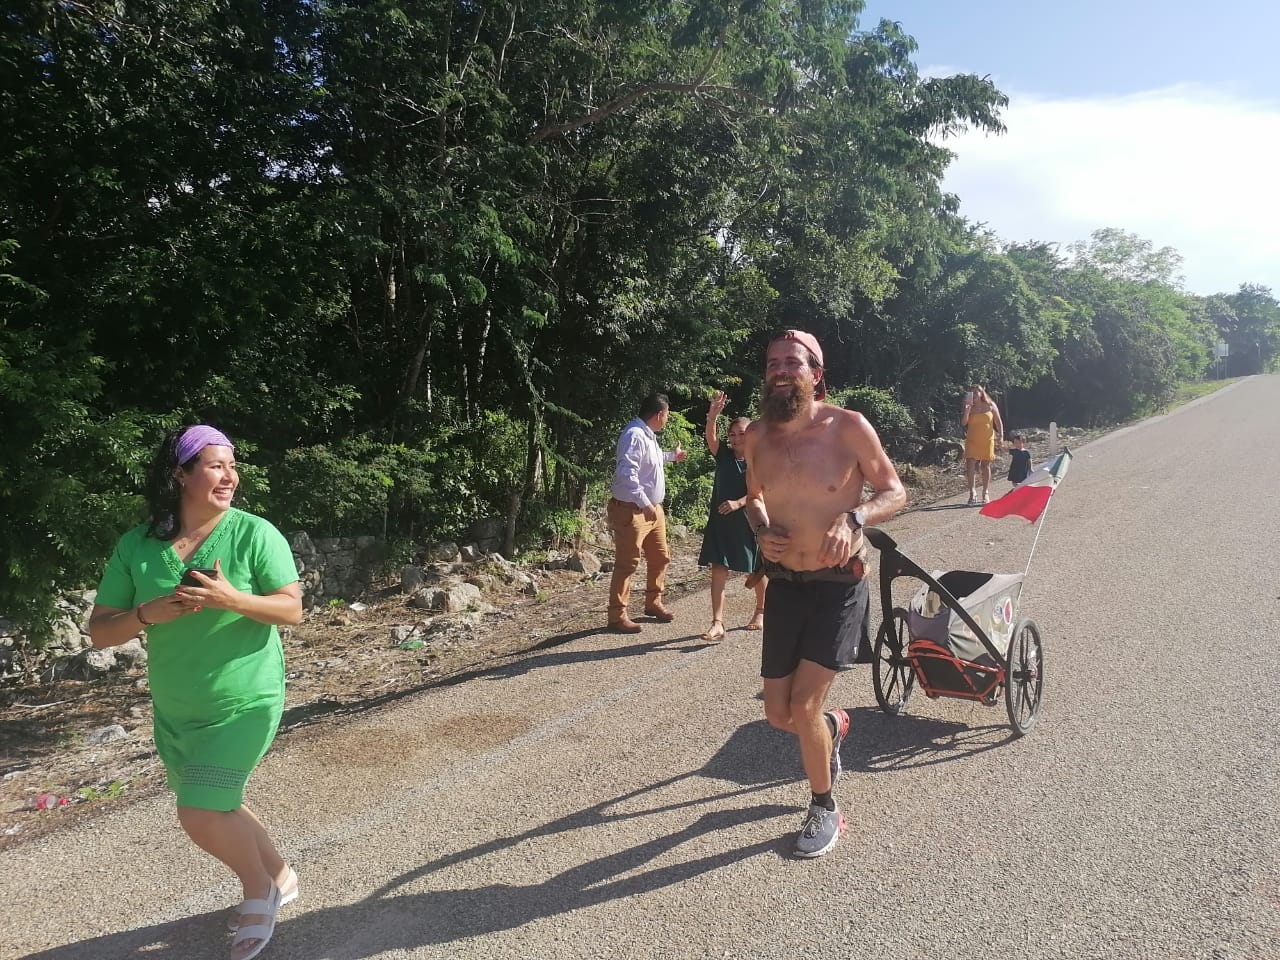 Jonas Deichmann 'Forrest Gump' llega al municipio de Chocholá en su camino rumbo a Mérida